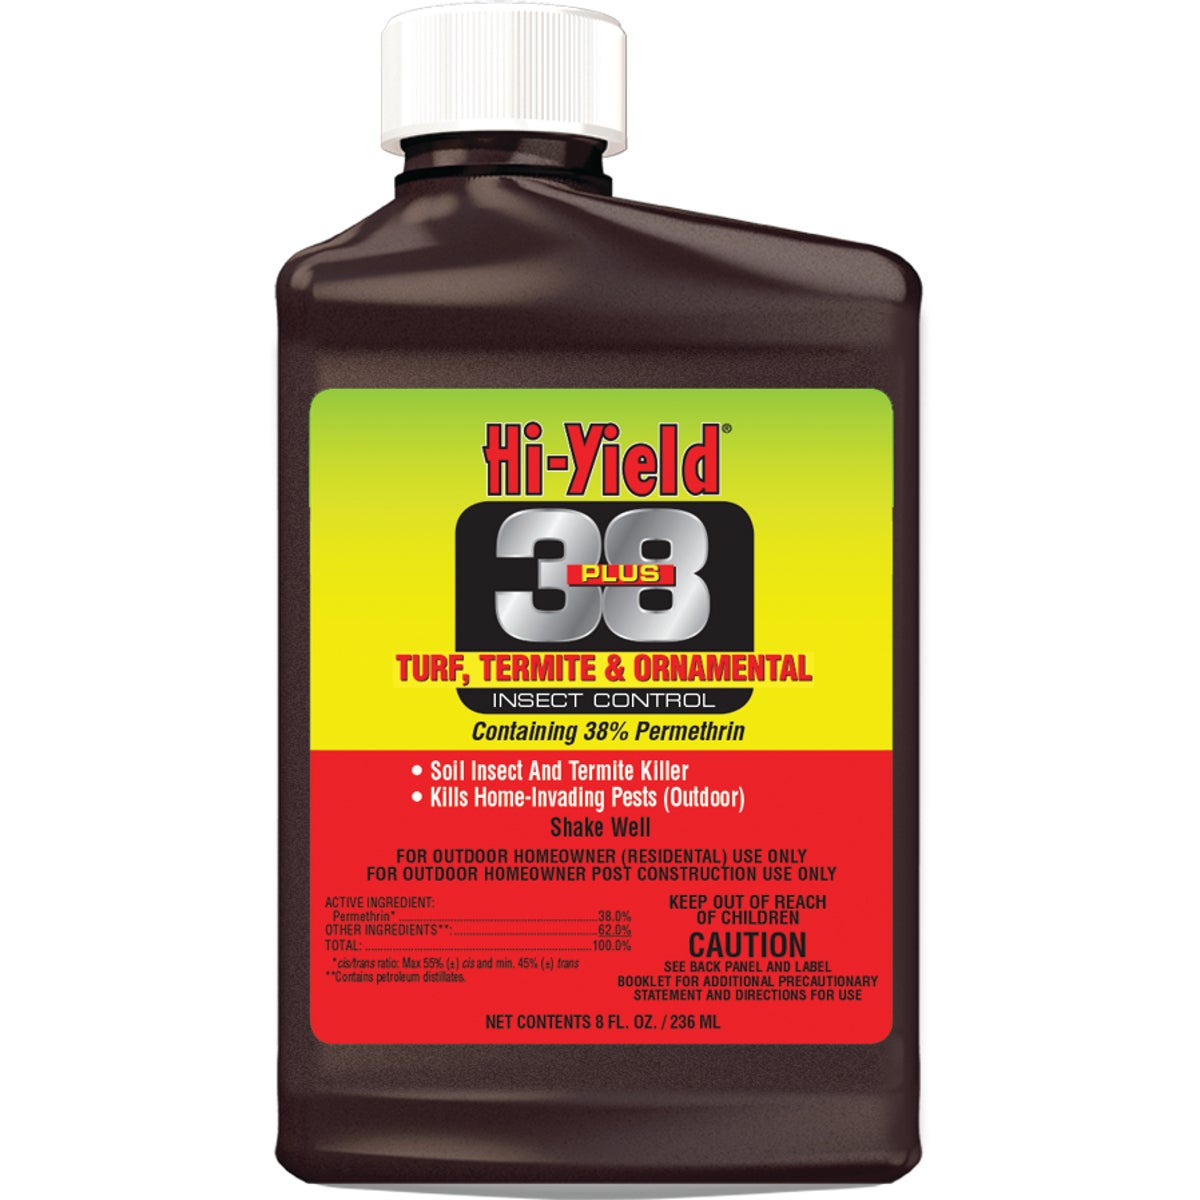 Hi-Yield 38 Plus 8 Oz. Concentrate Turf, Termite, & Ornamental Insect Killer